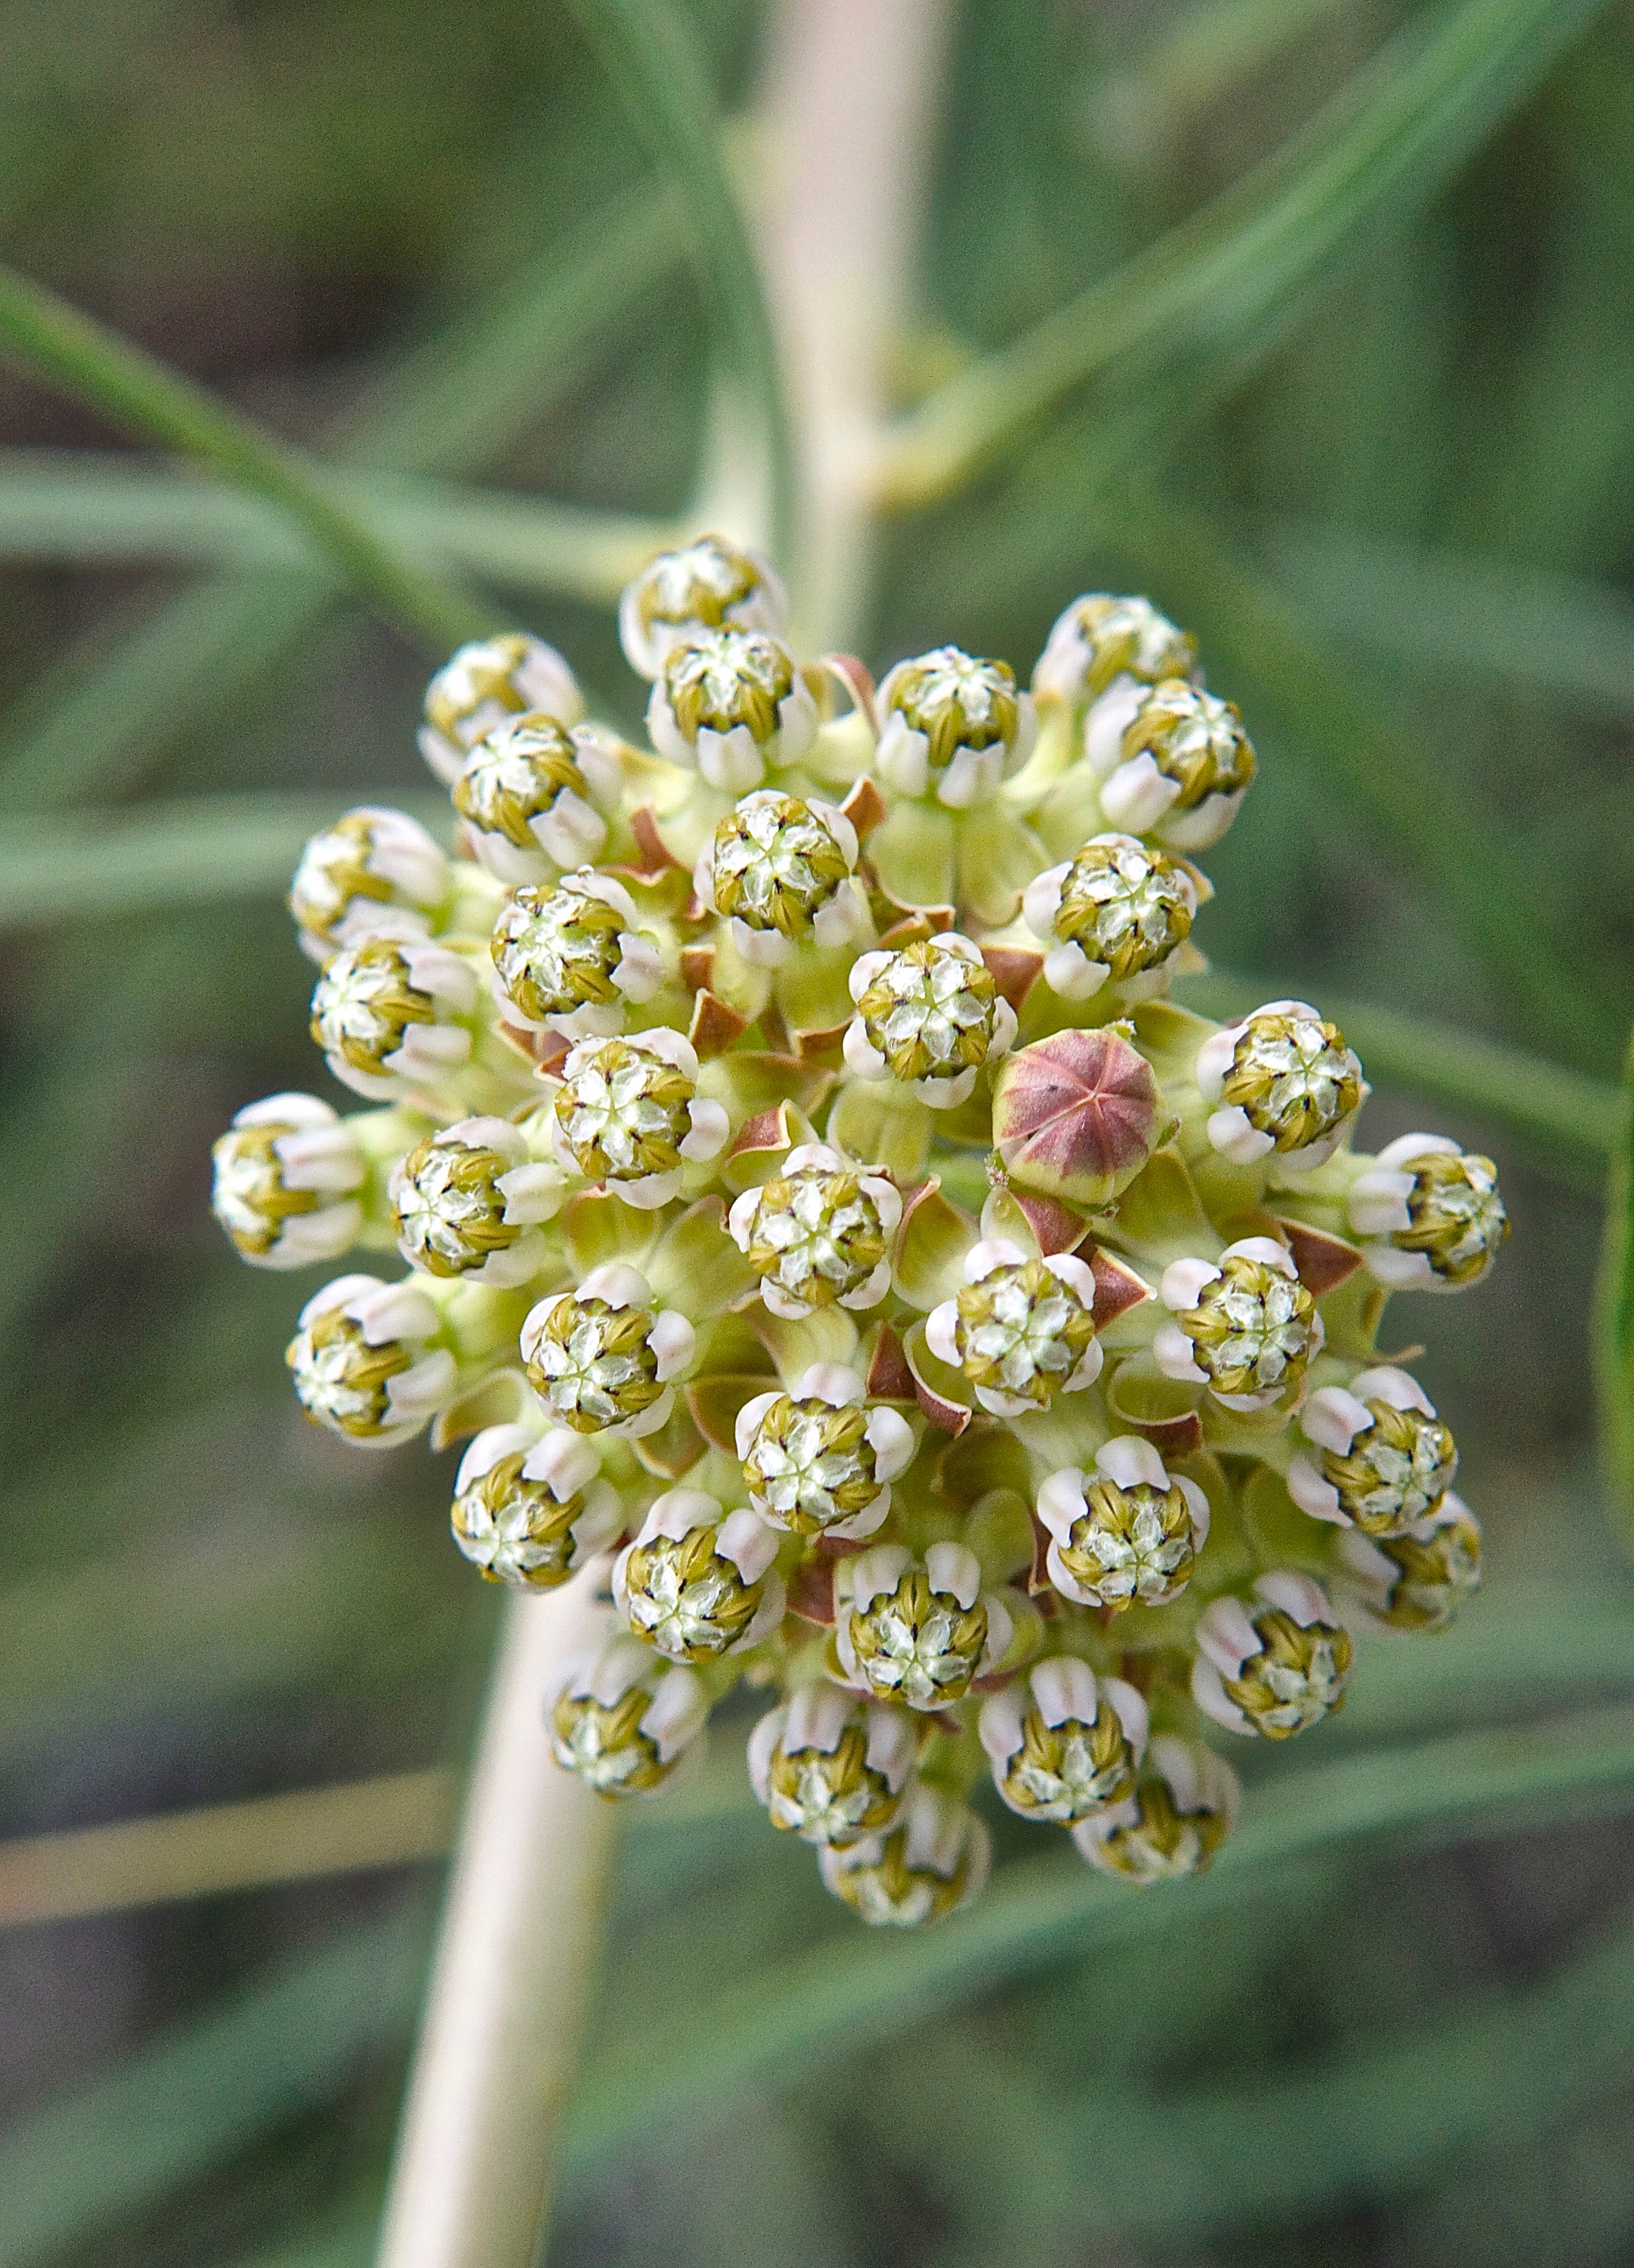 Engleman's Milkweed (Asclepias engelmanniana)